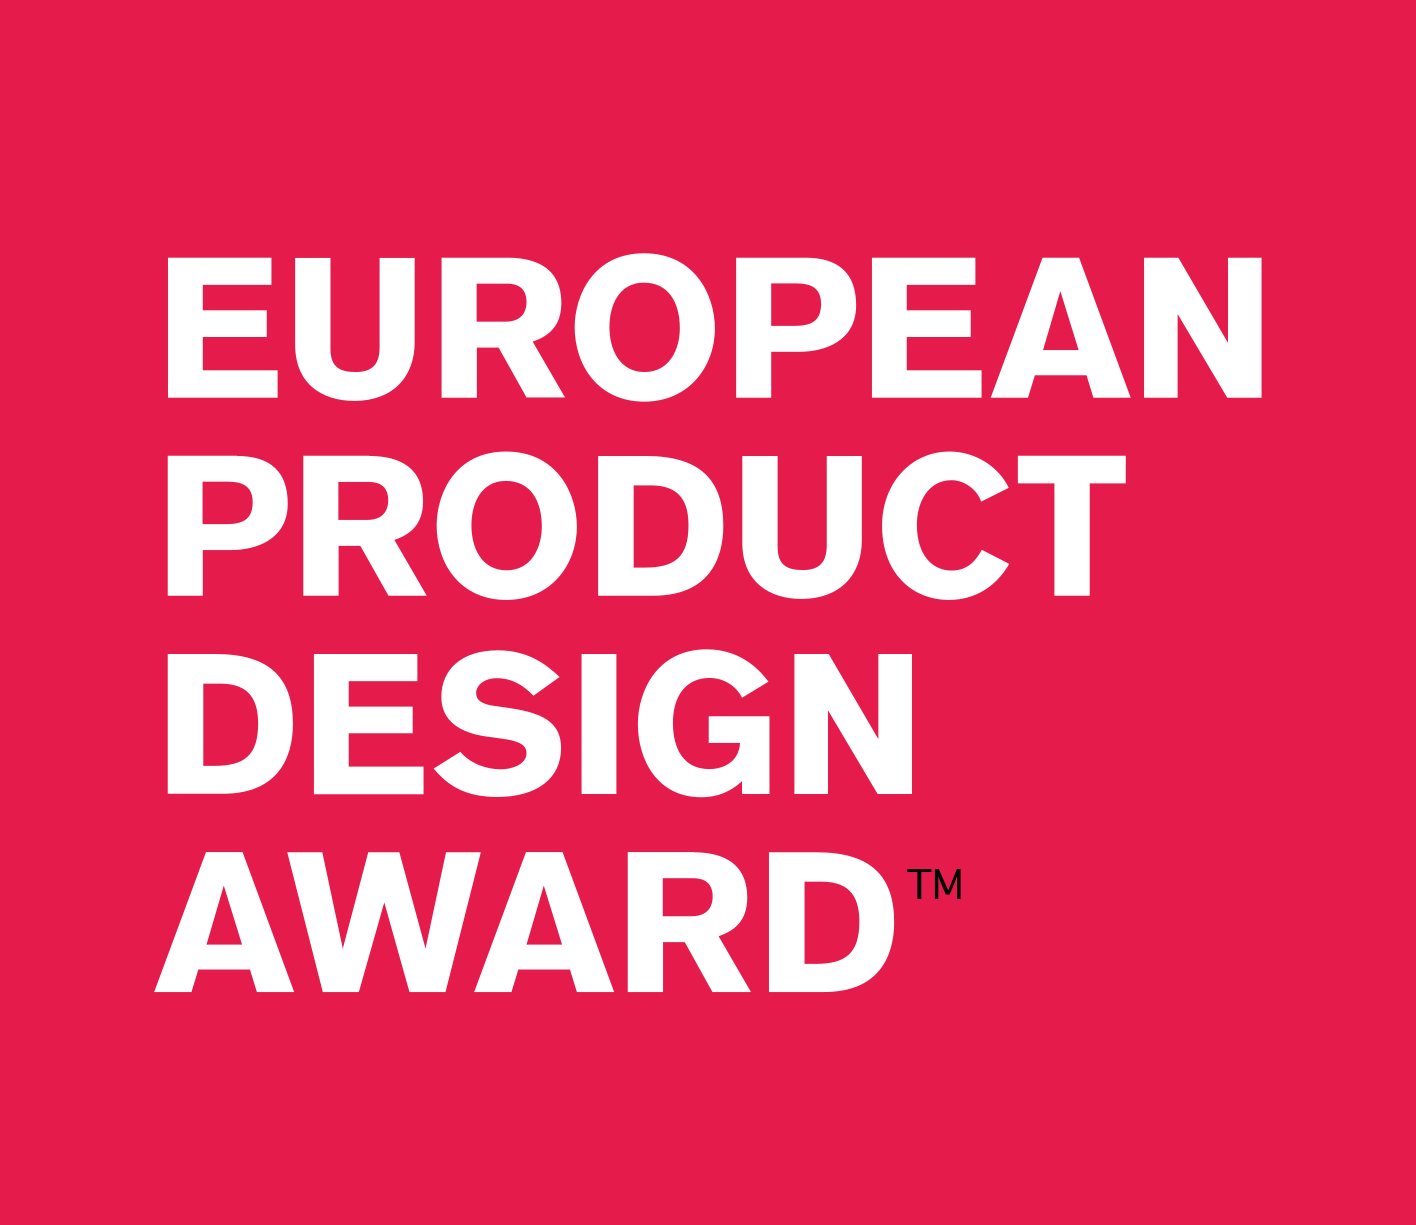 European Product Design Awards™ Faqs